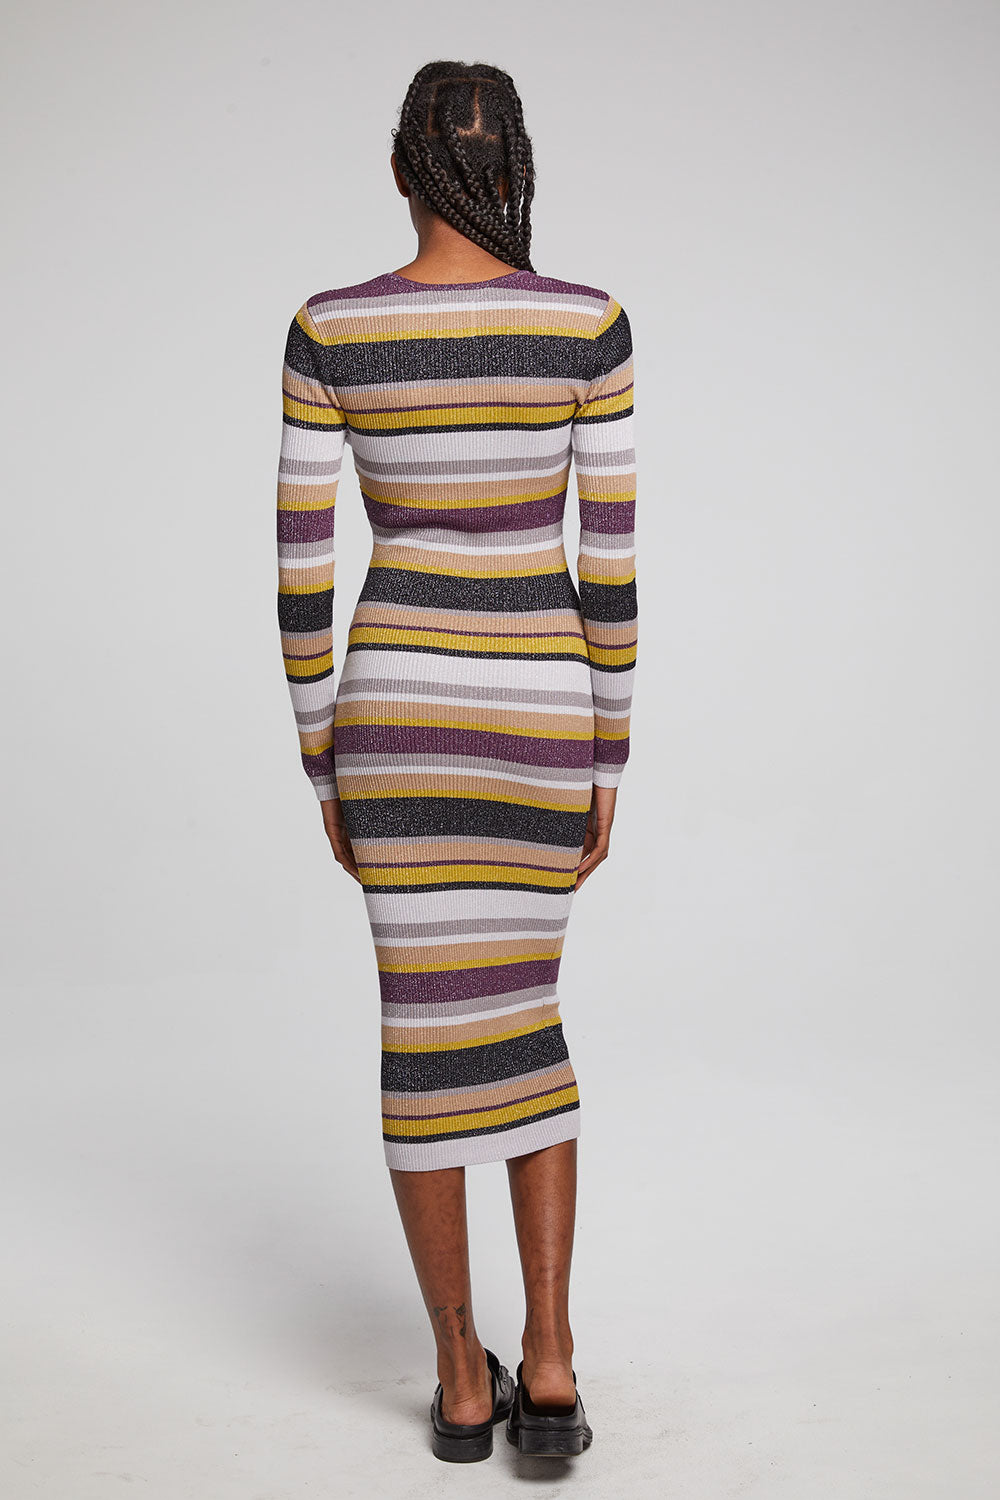 Veda Haight Street Stripe Midi Dress WOMENS chaserbrand